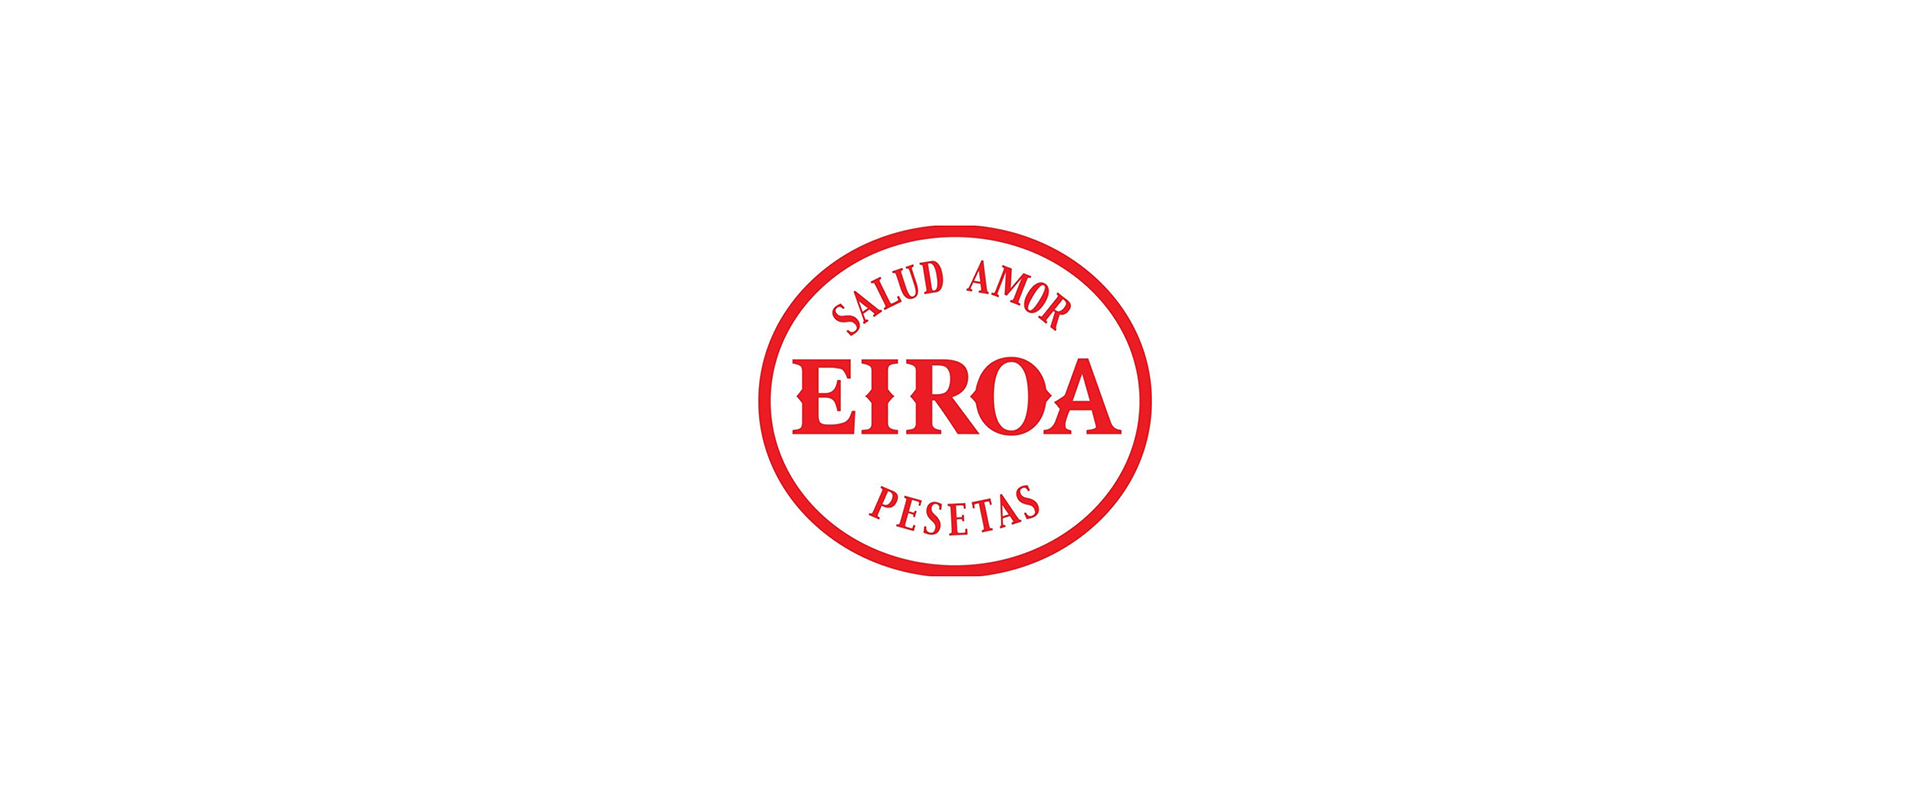 New World Cigars > Eiroa